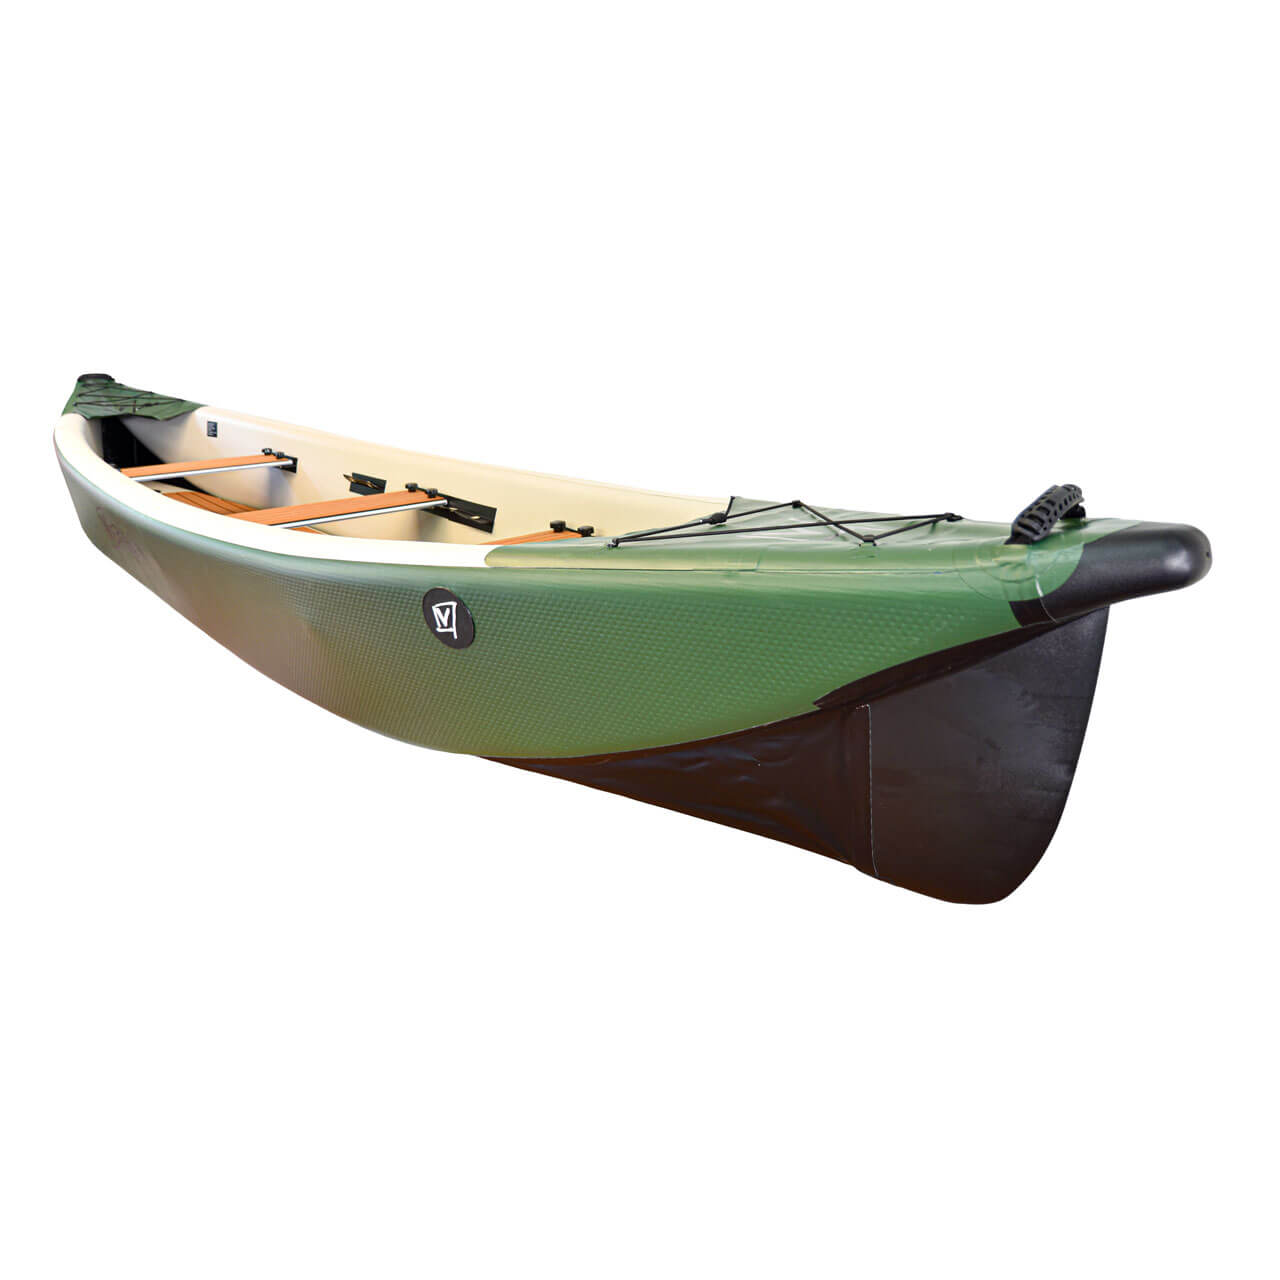 Verano - Inflatable CanCan Canoe